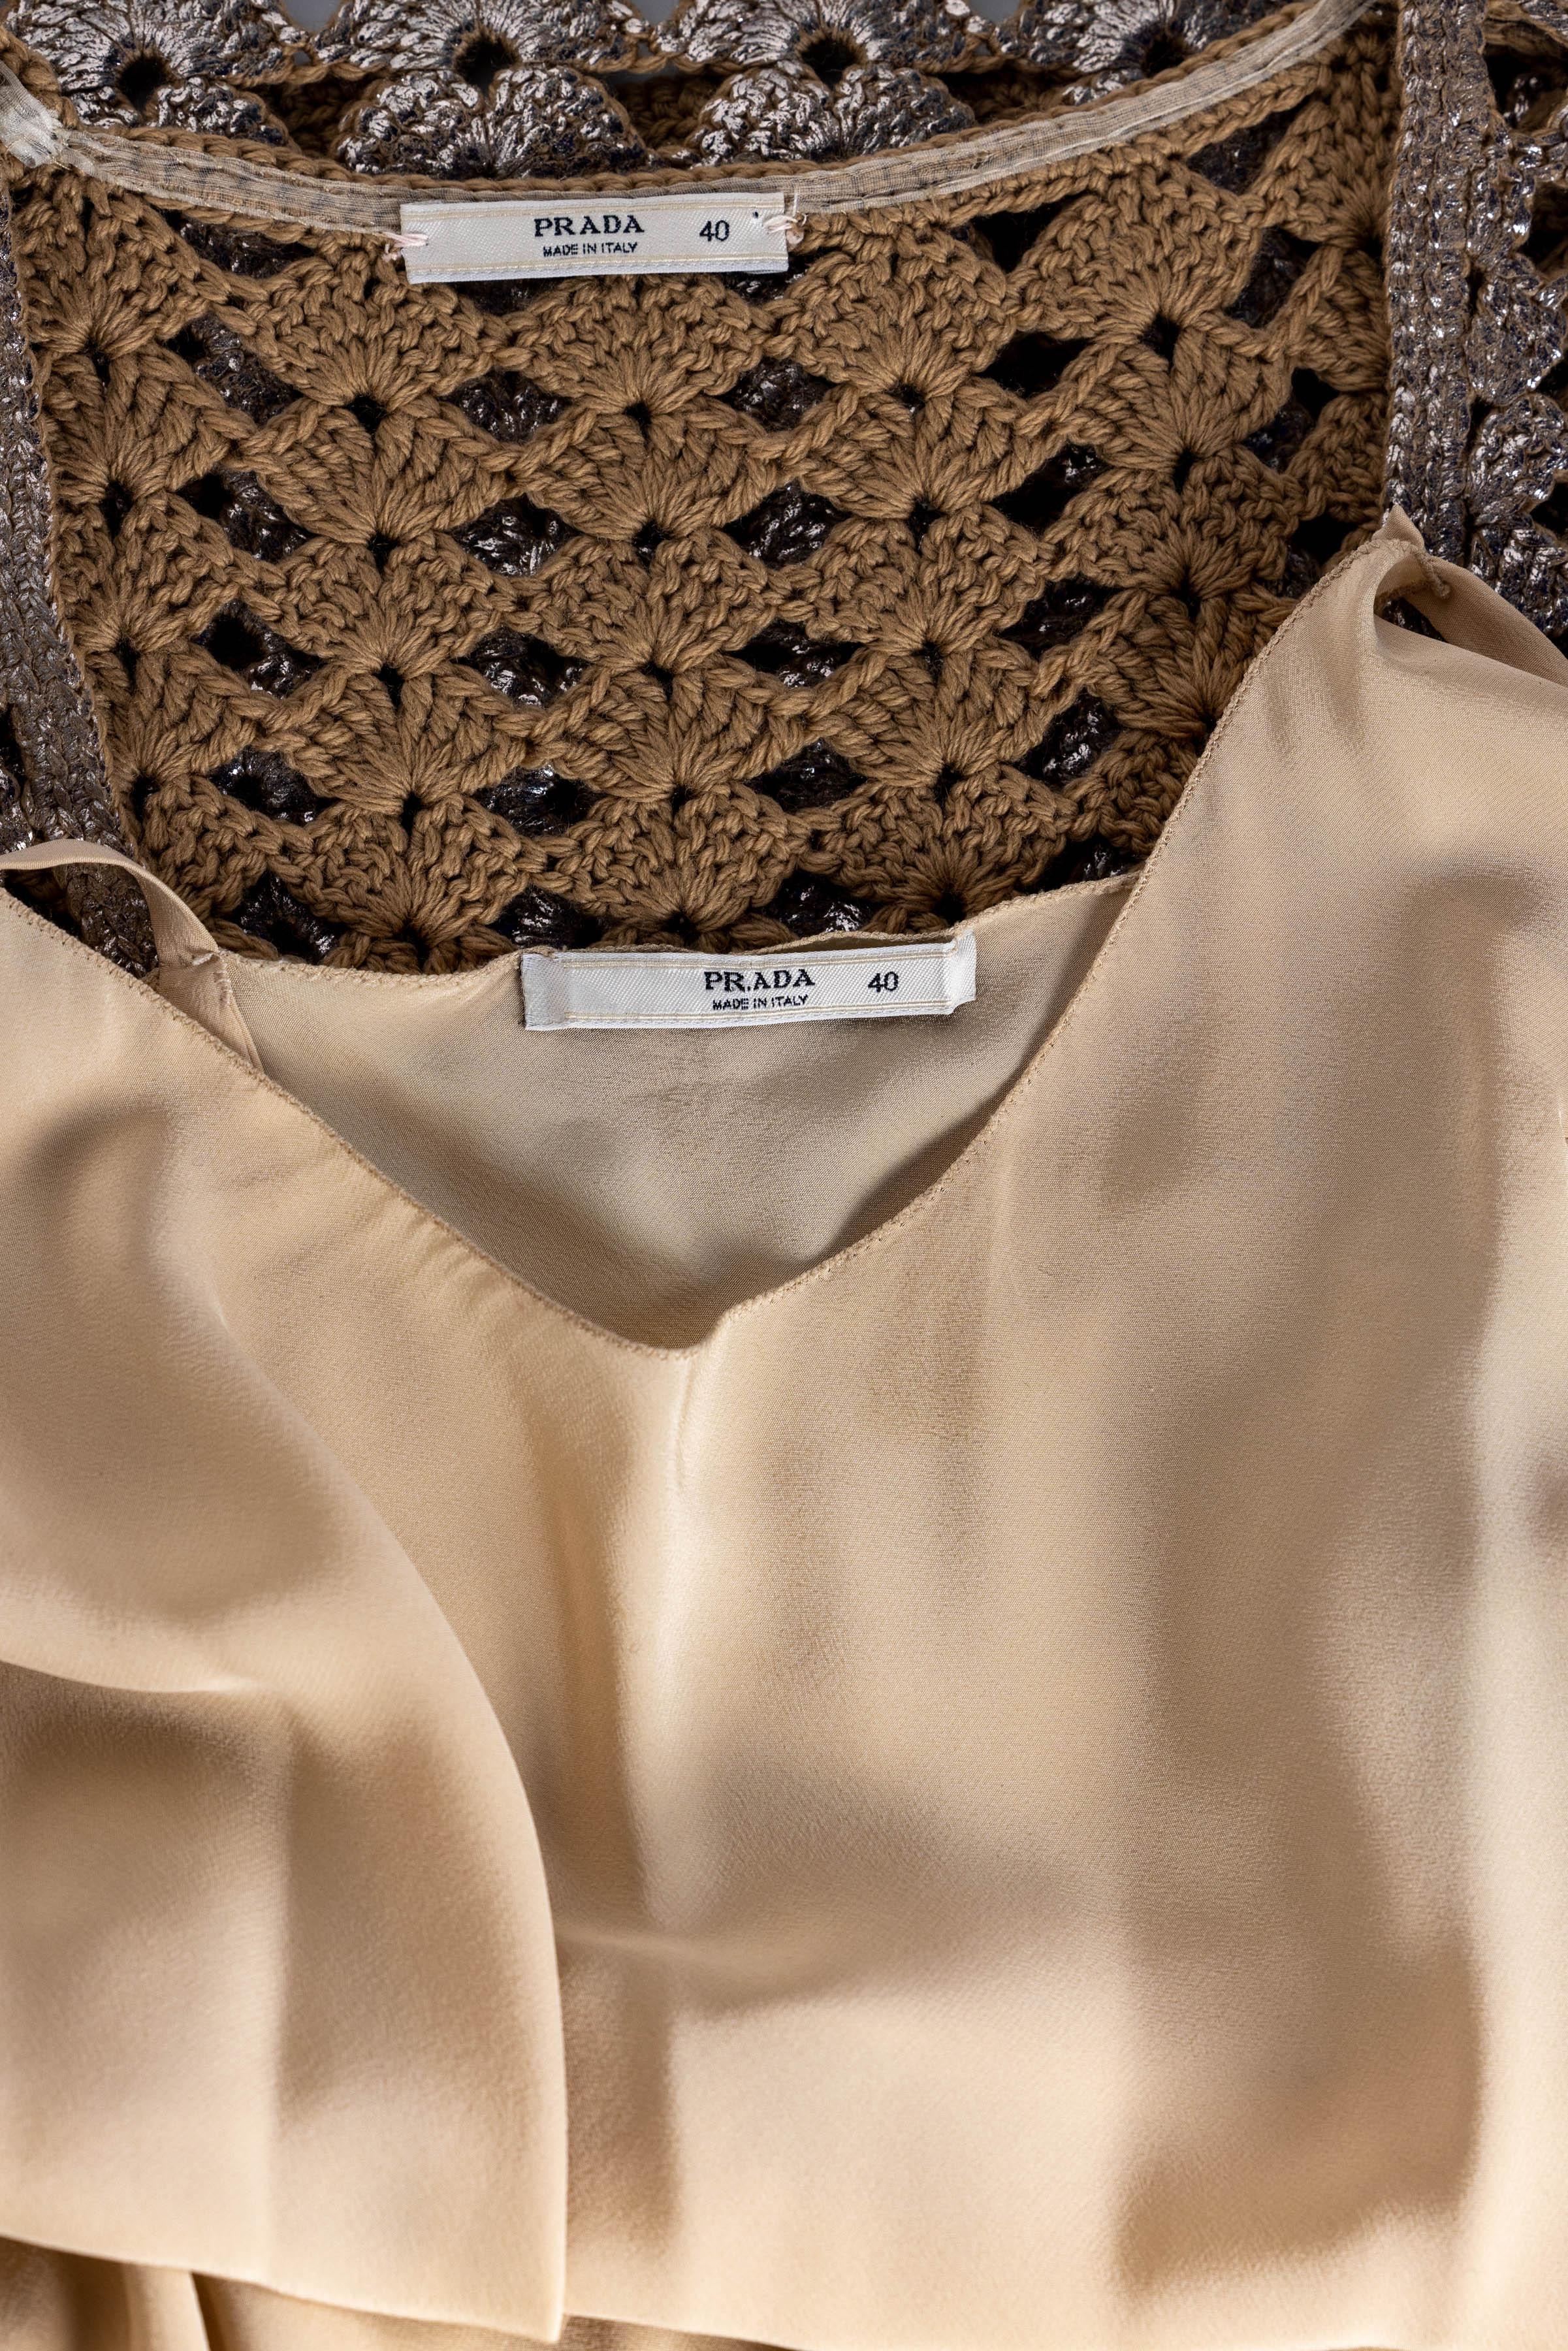 Prada Bronze Metallic Crochet Dress, 2000s For Sale 5